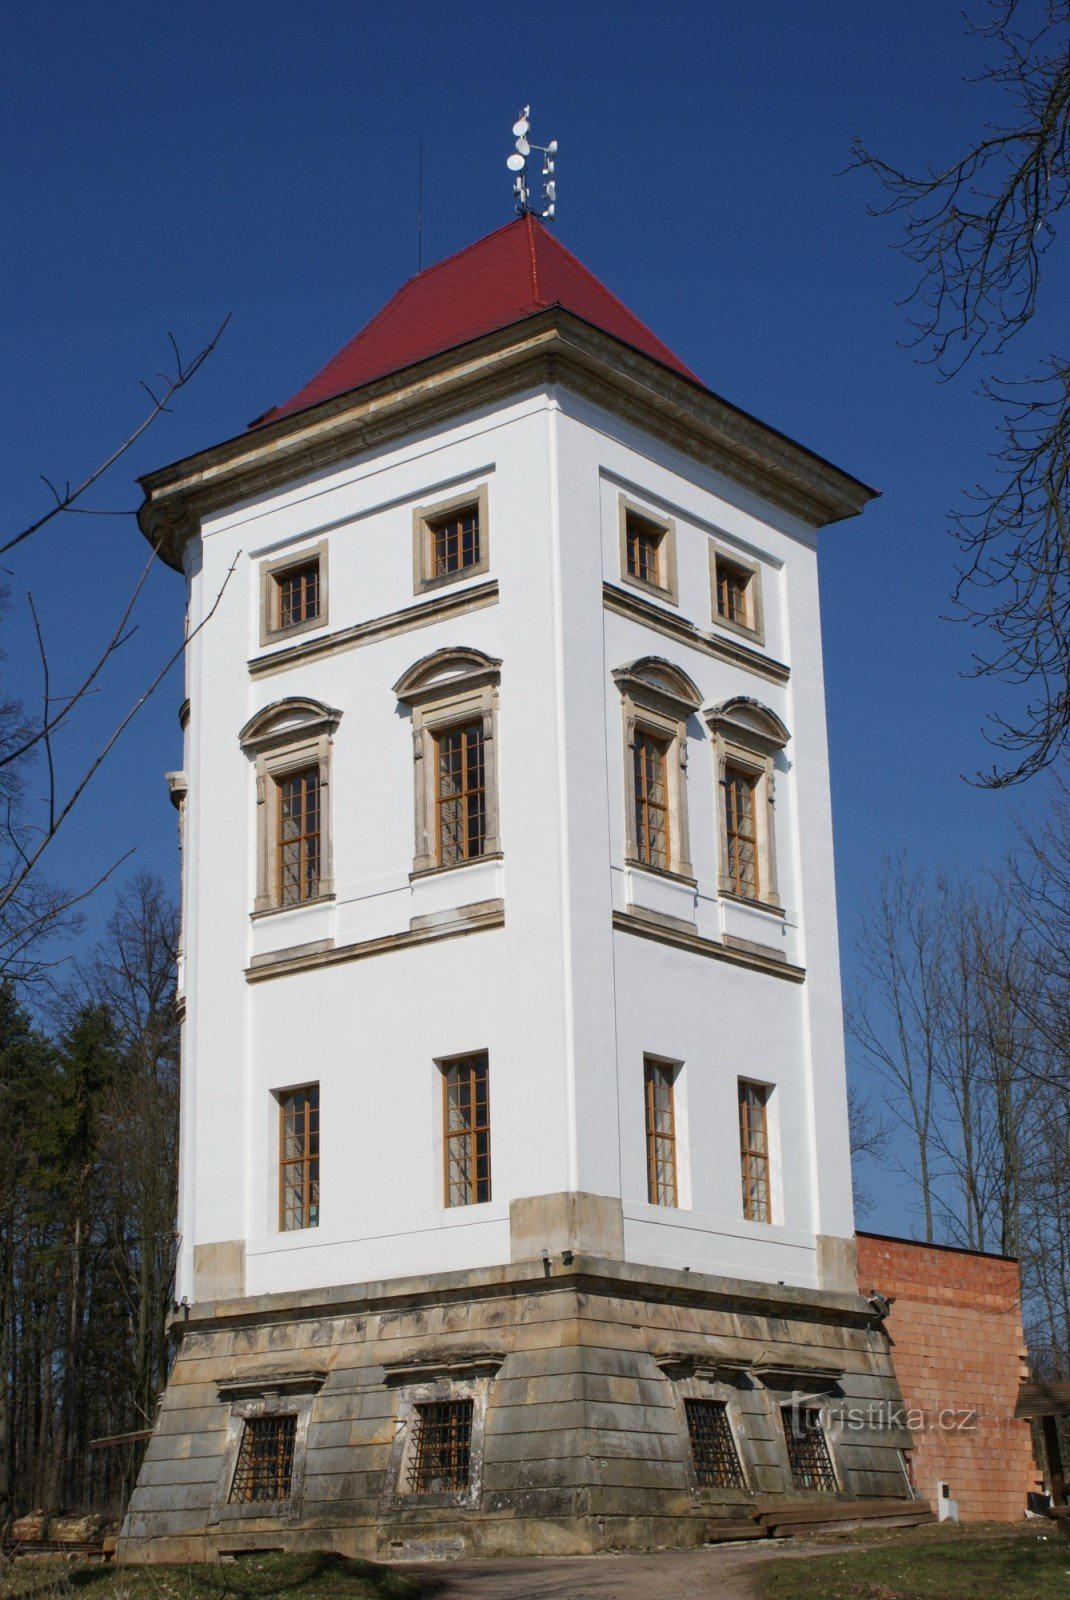 torre del castillo